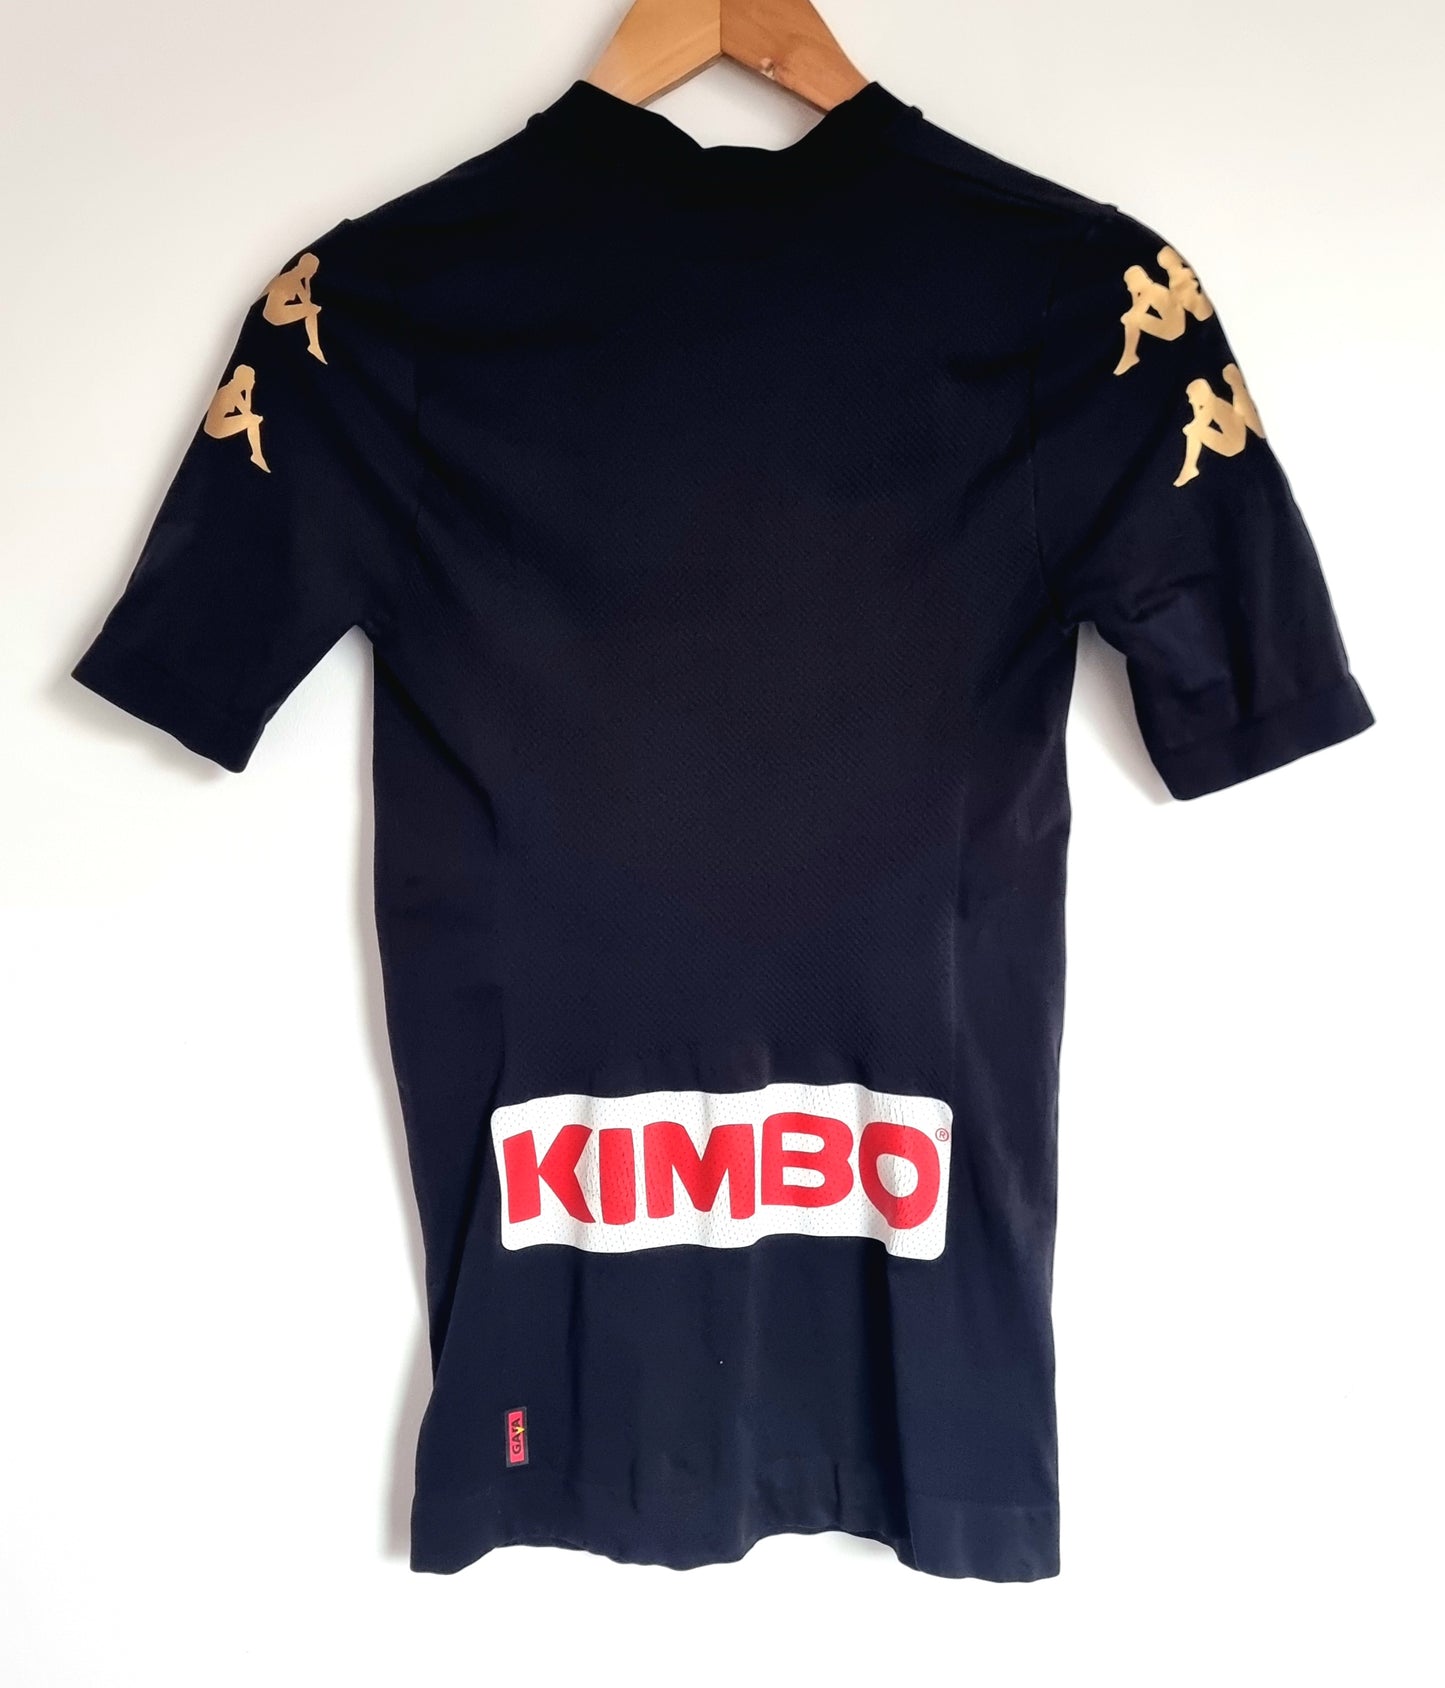 Kappa Kombat Skin Napoli 16/17 Player Spec Third Shirt Medium / Large